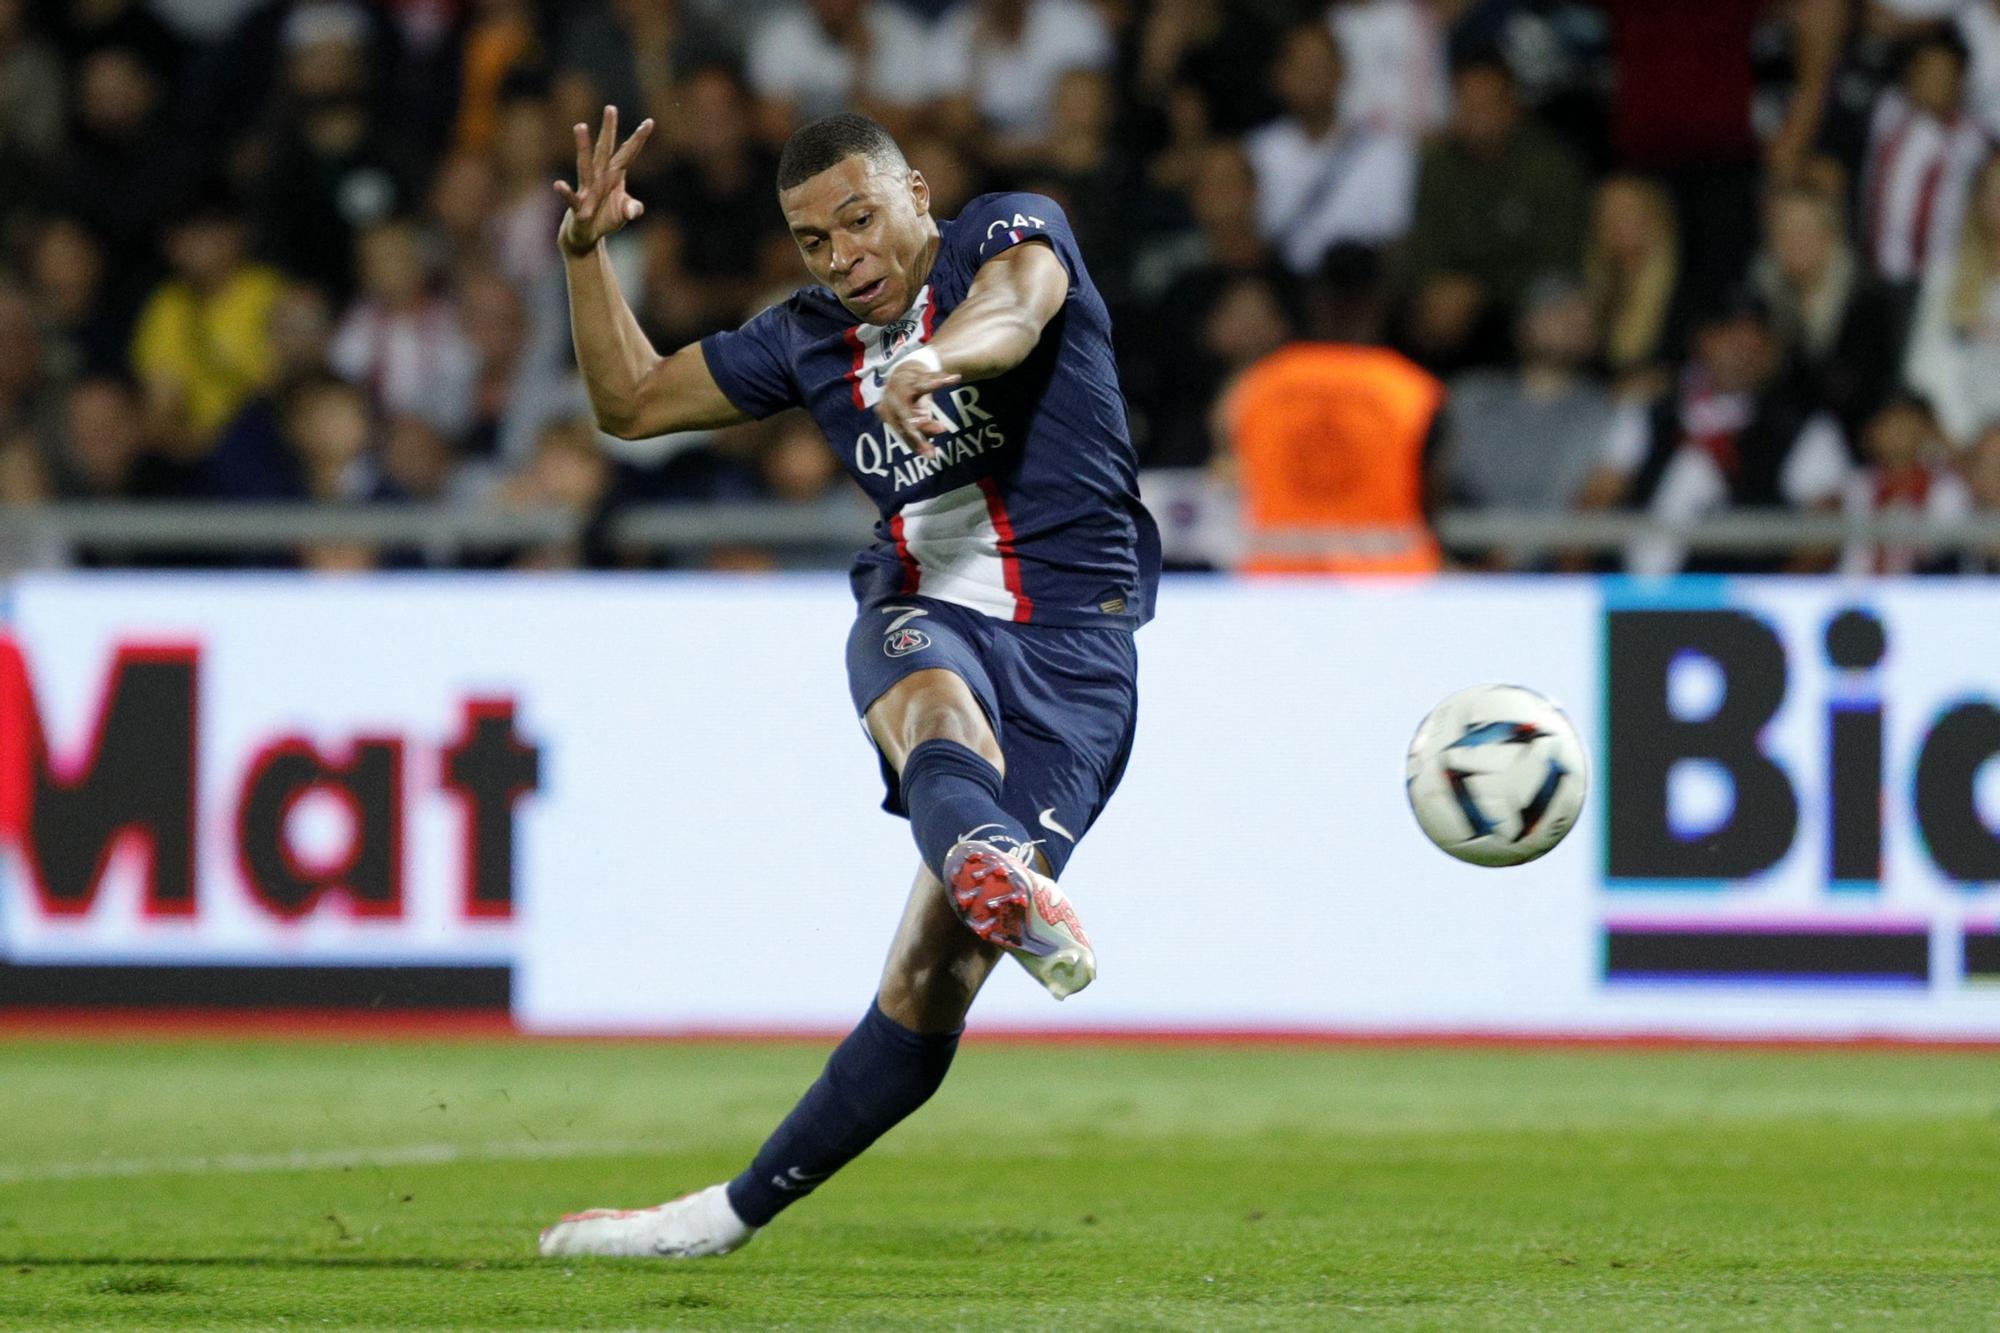 Kylian Mbappé (PSG, Fútbol, Francia) - 630 millones de euros brutos en 3 años - Firmado en 2022